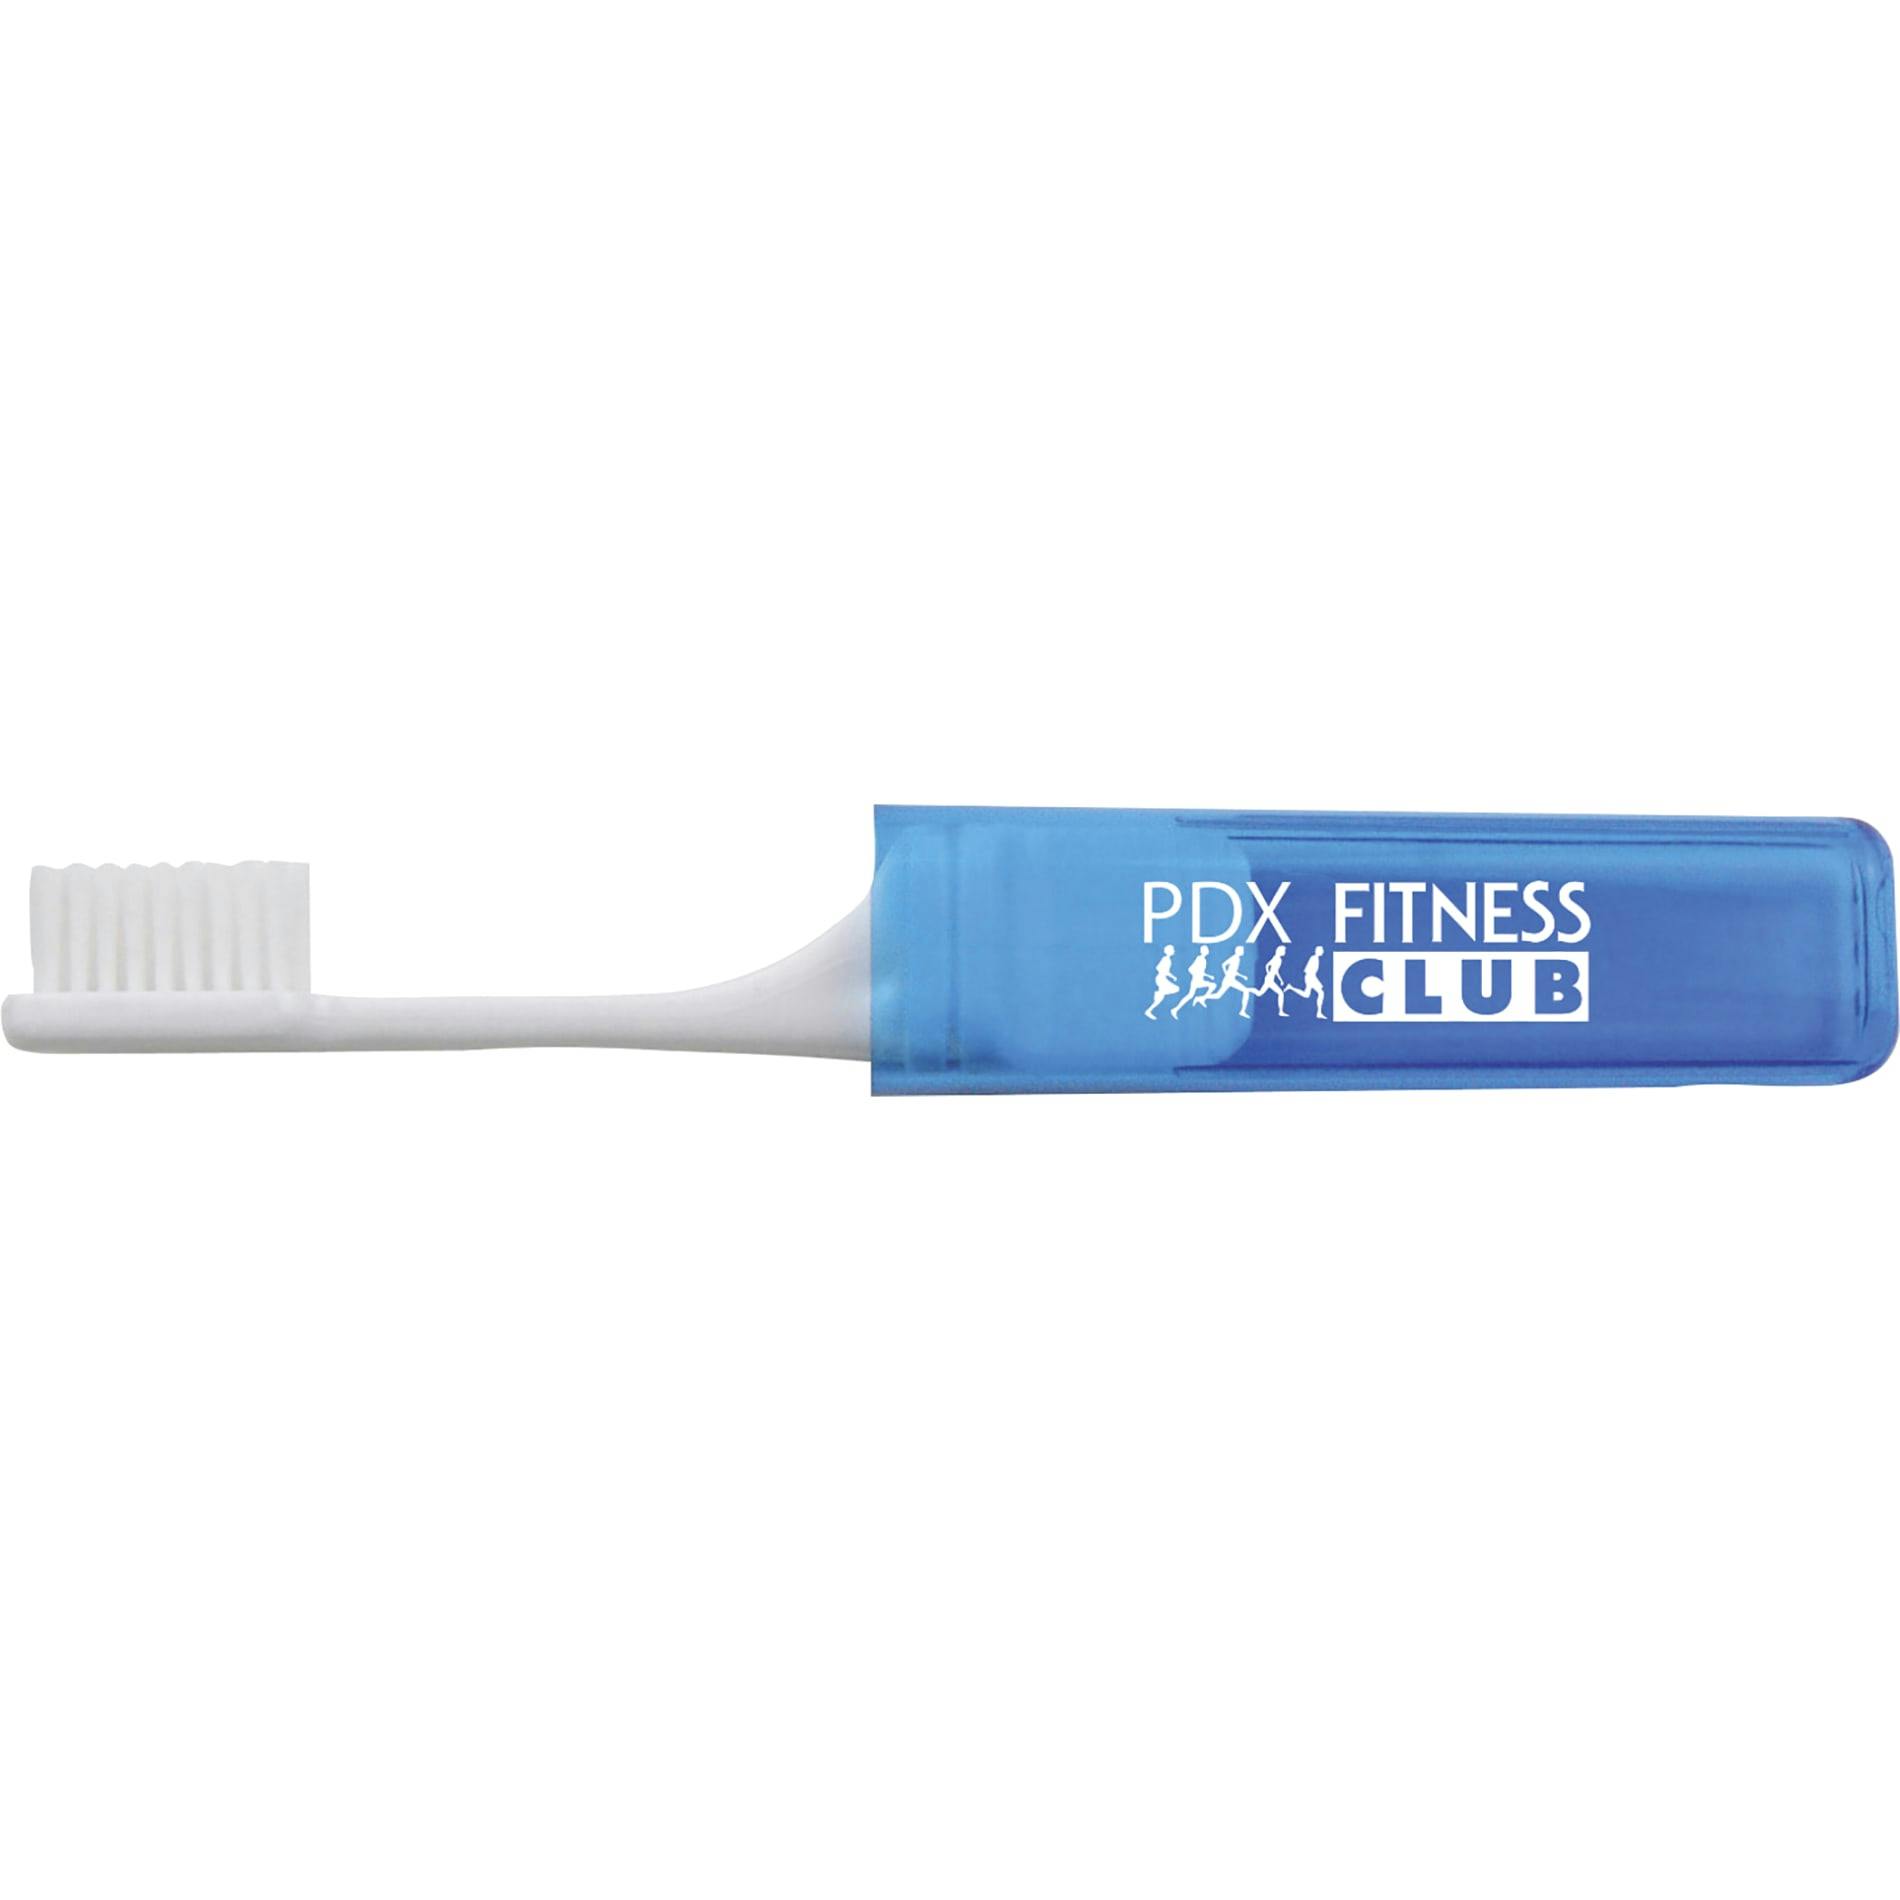 Travel Toothbrush - additional Image 1